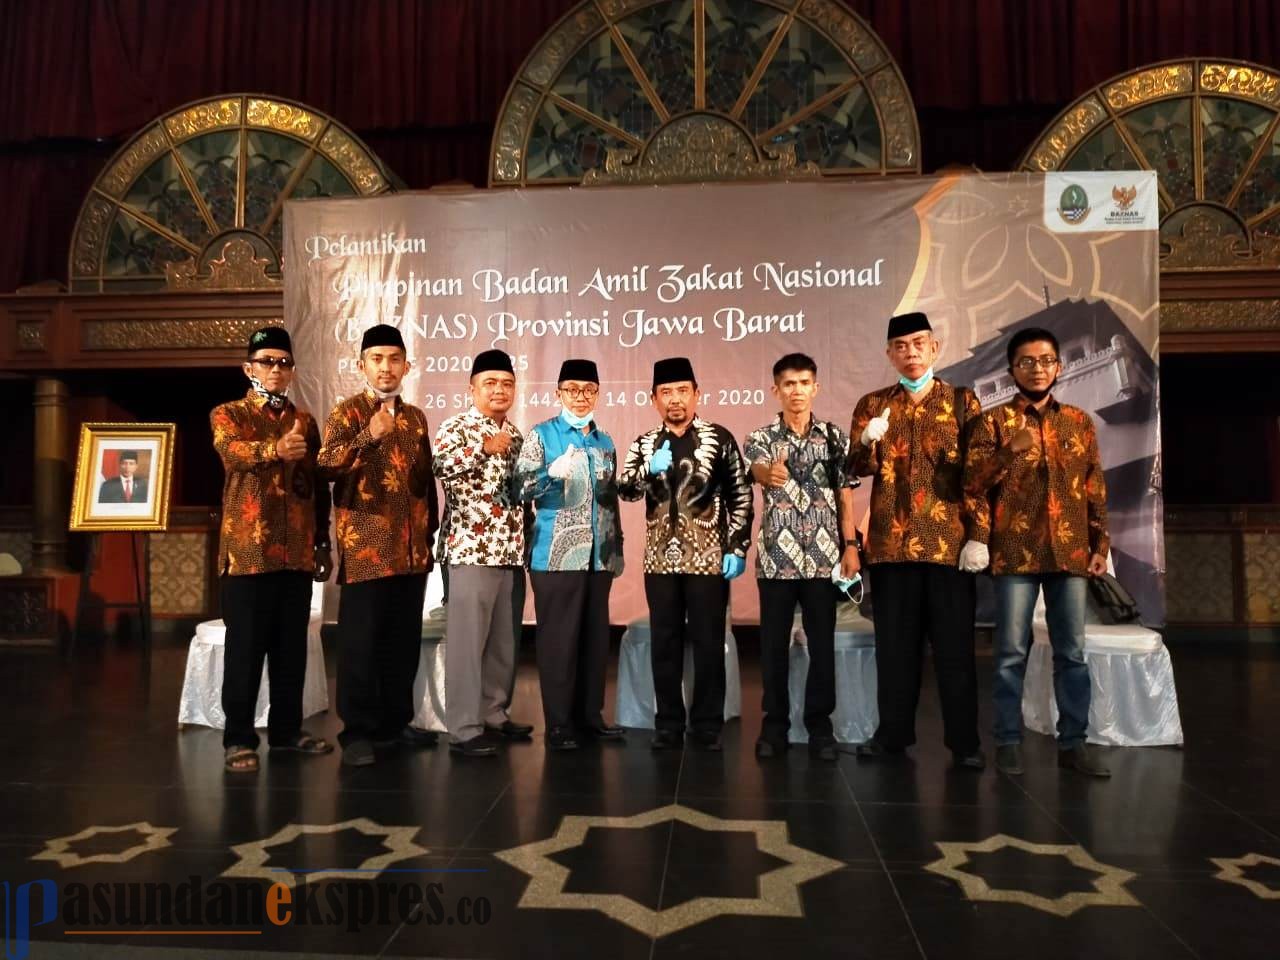 Anang Jauharuddin Terpilih Menjadi Ketua Baznas Jawa Barat